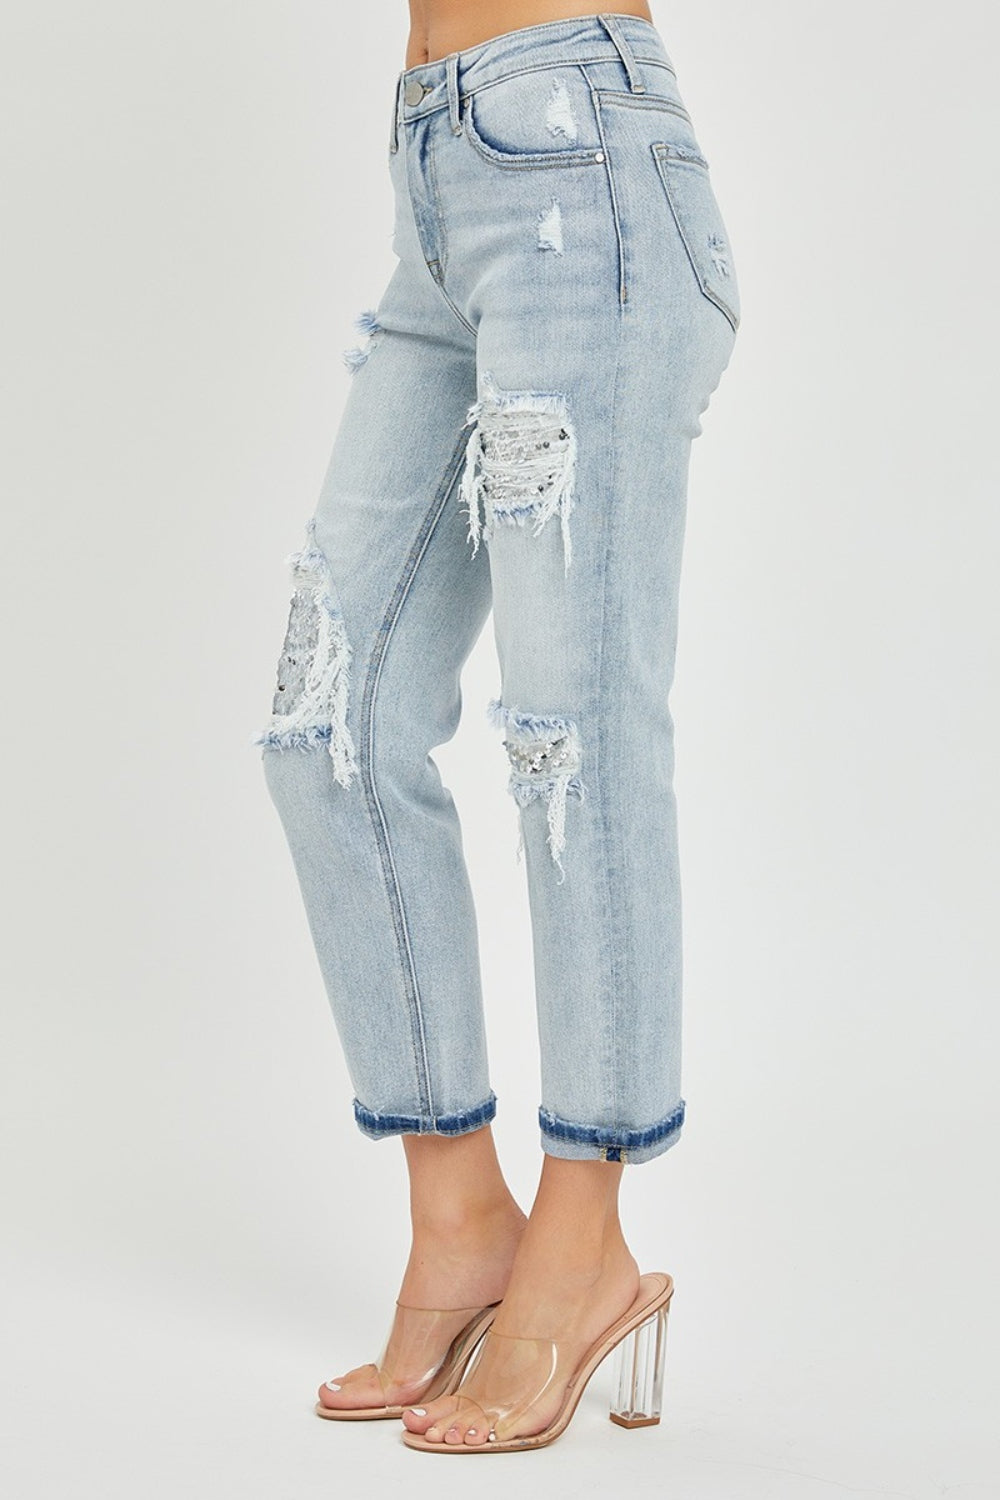 Rissen Mid-Rise Sequin Patched Jeans